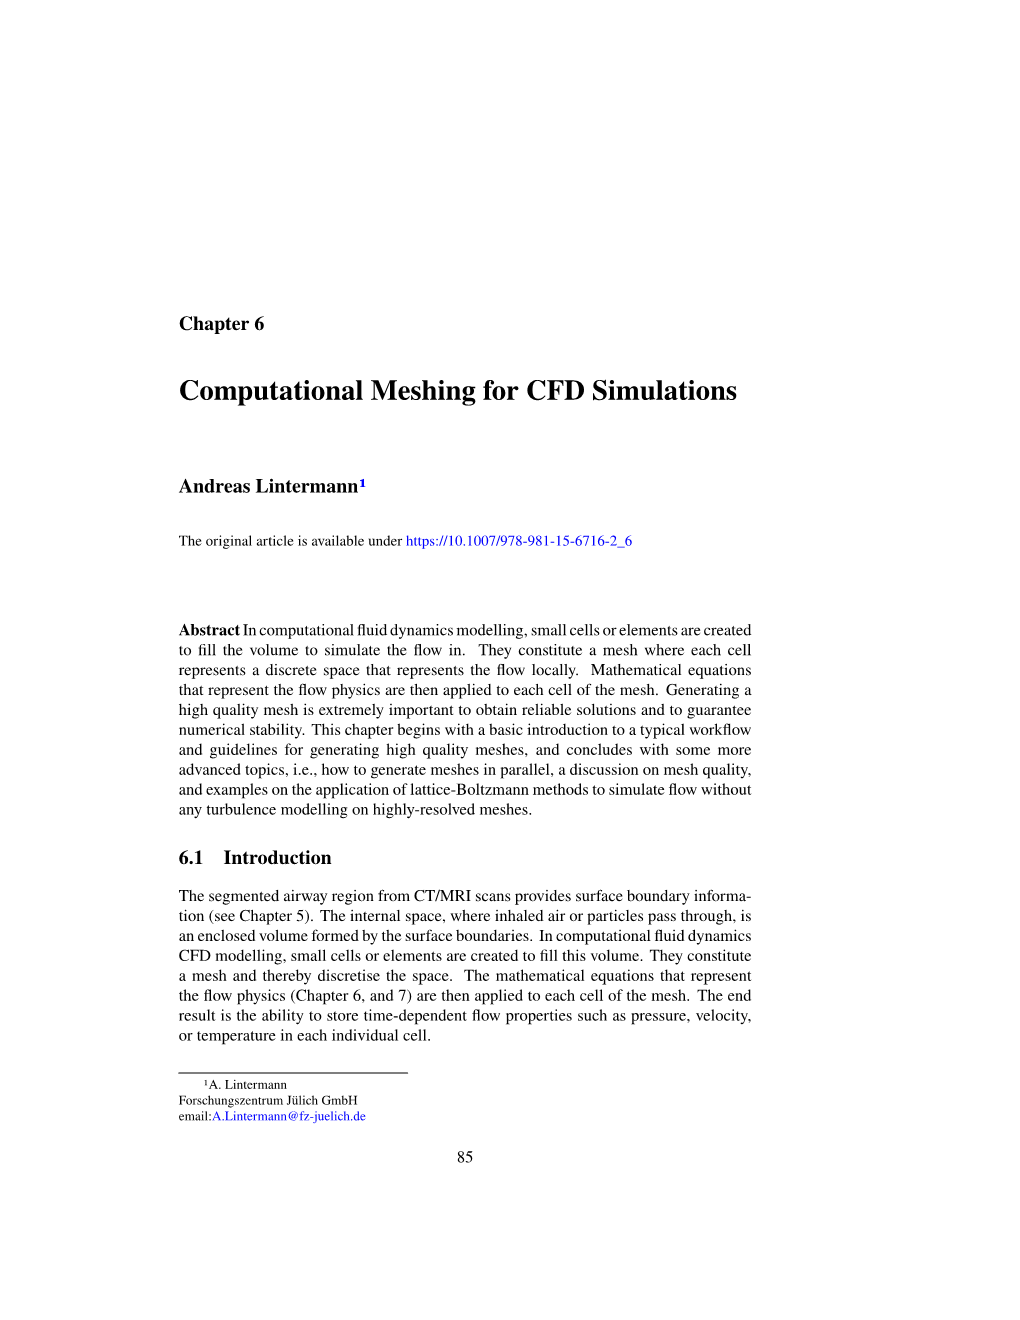 Computational Meshing for CFD Simulations